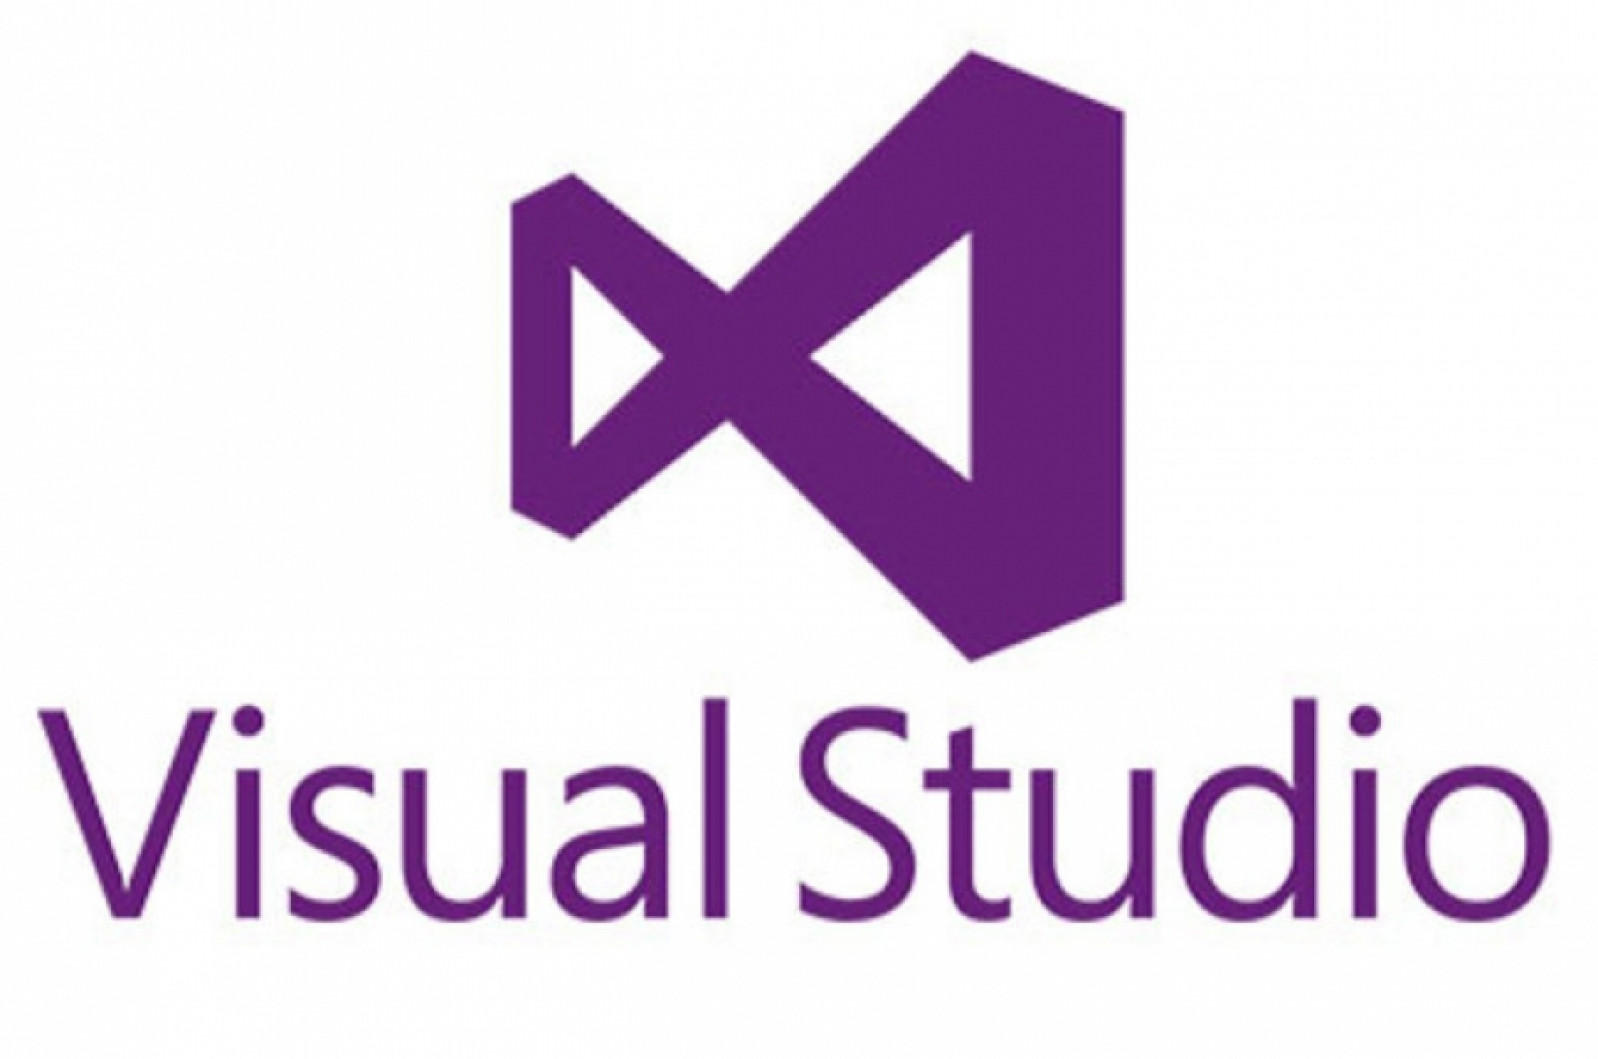 Updates to Visual Studio courses